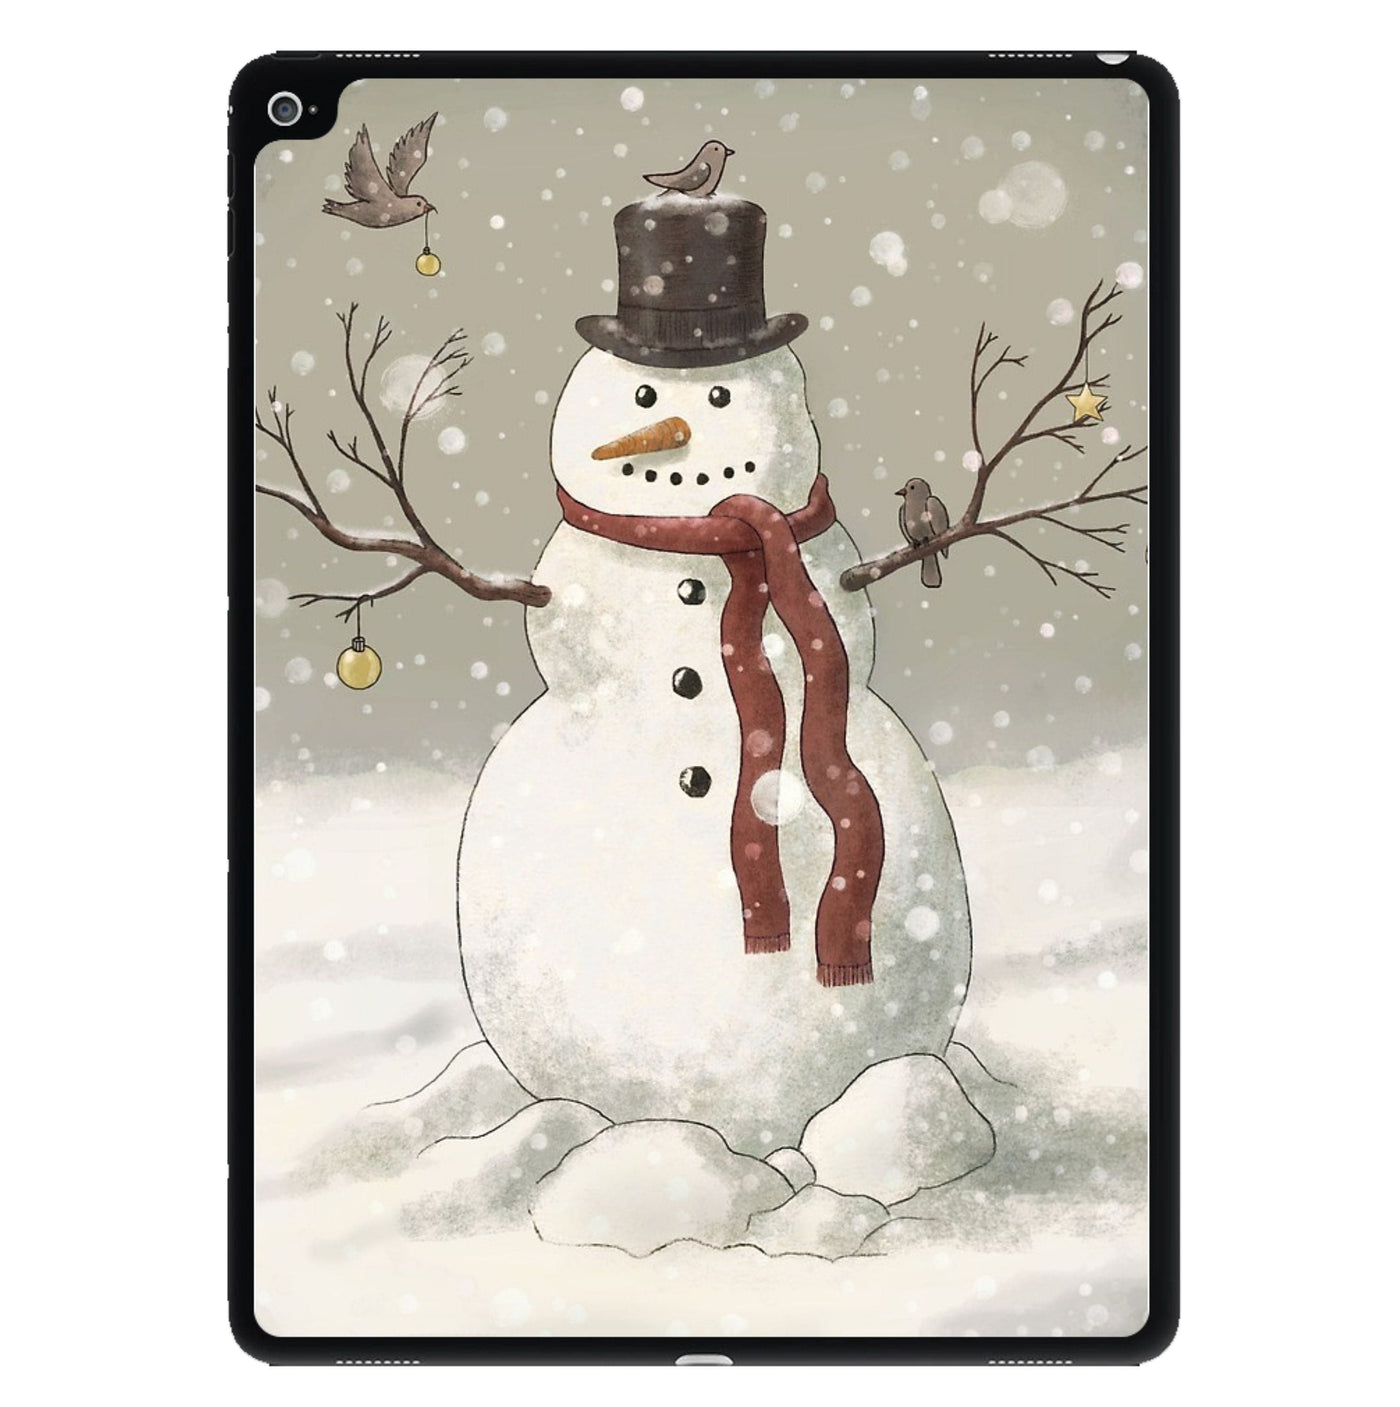 Christmas Snowman Drawing iPad Case